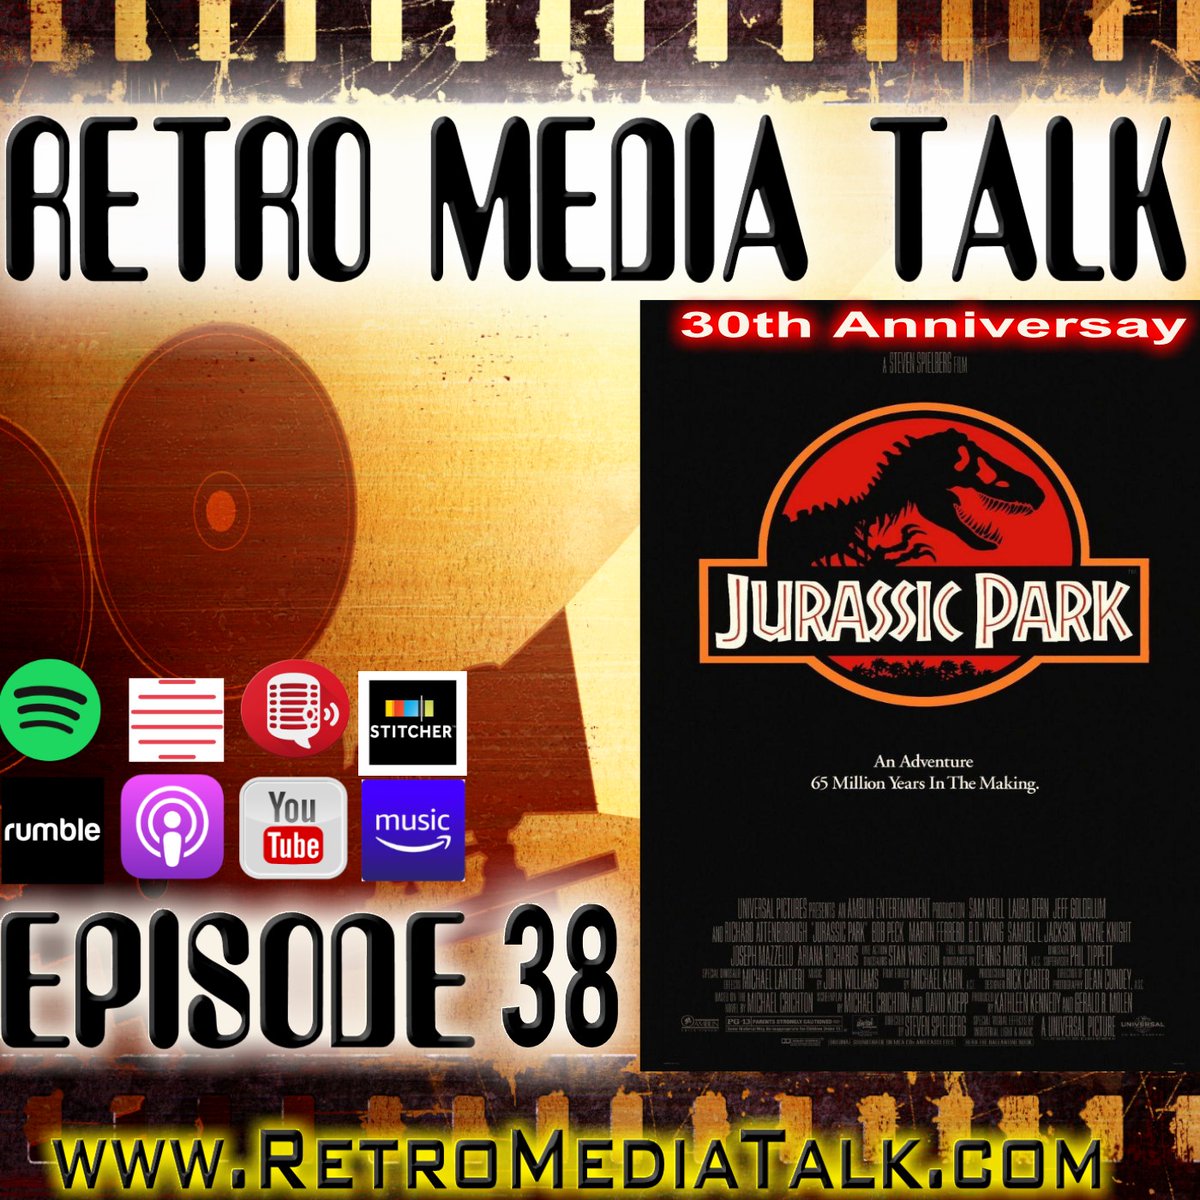 JURASSIC PARK -Episode 38: Retro Media Talk | Podcast
RetroMediaTalk.com
🎹
#jurassicpark30thanniversary #retromedia #jurassicpark #podcast #StevenSpielberg #90sMovies #90s #episode38 #retromediatalk #podcasts #podcast #podcasting #spotifypodcast #applepodcasts #stitcher